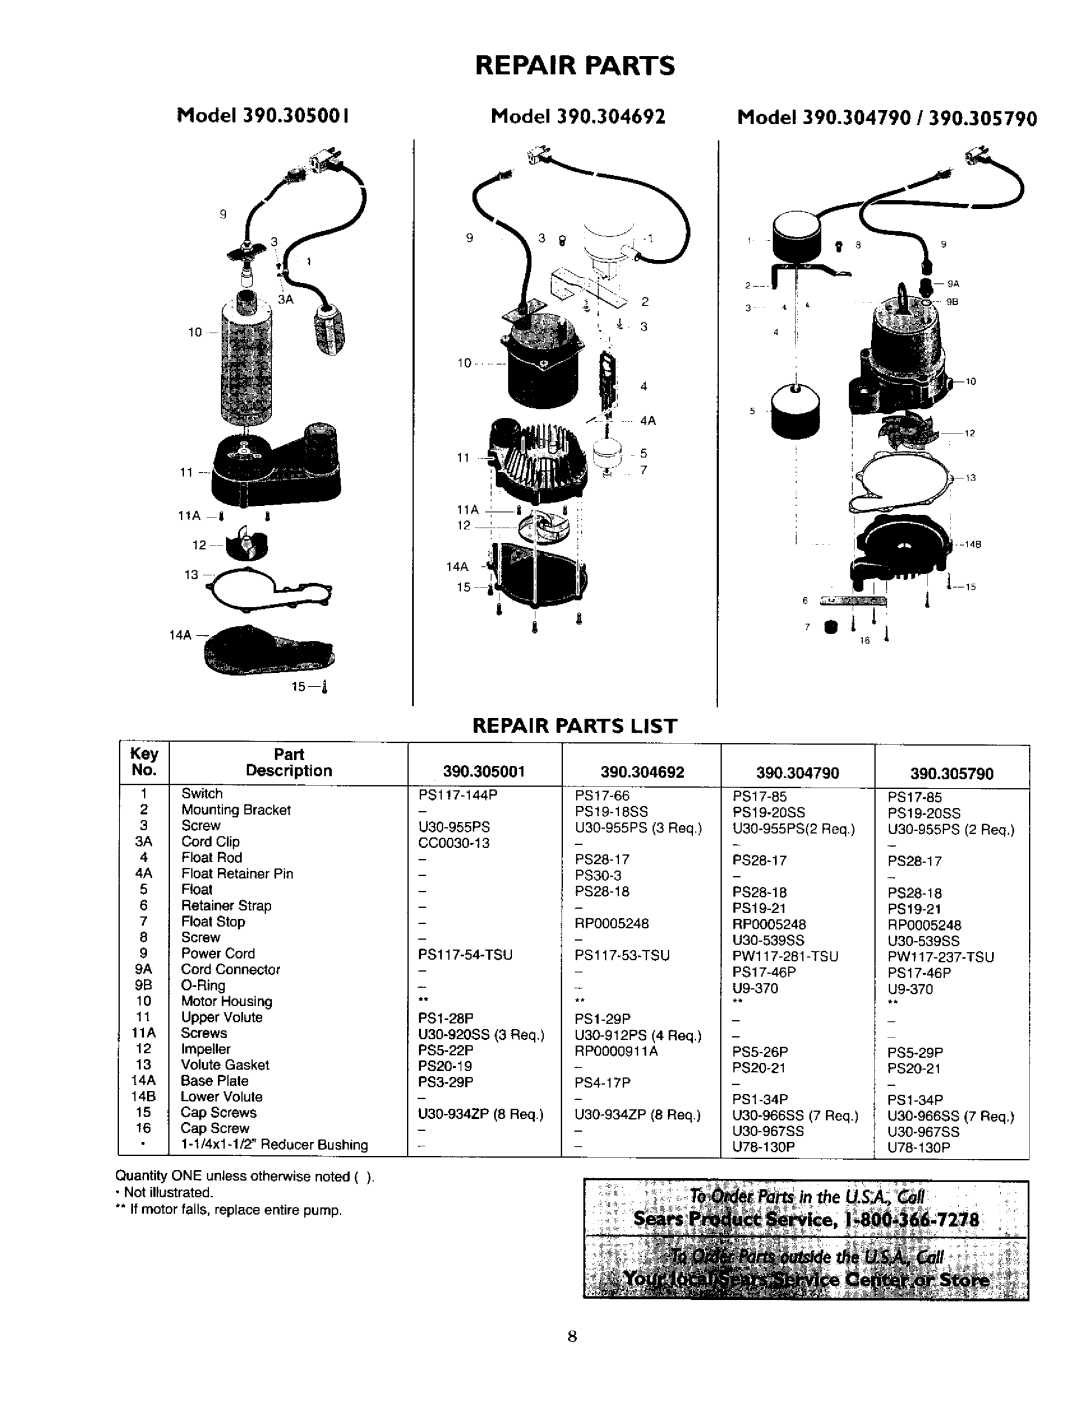 Sears 390.304692 owner manual Repair Parts, Parts List, Float Rod 